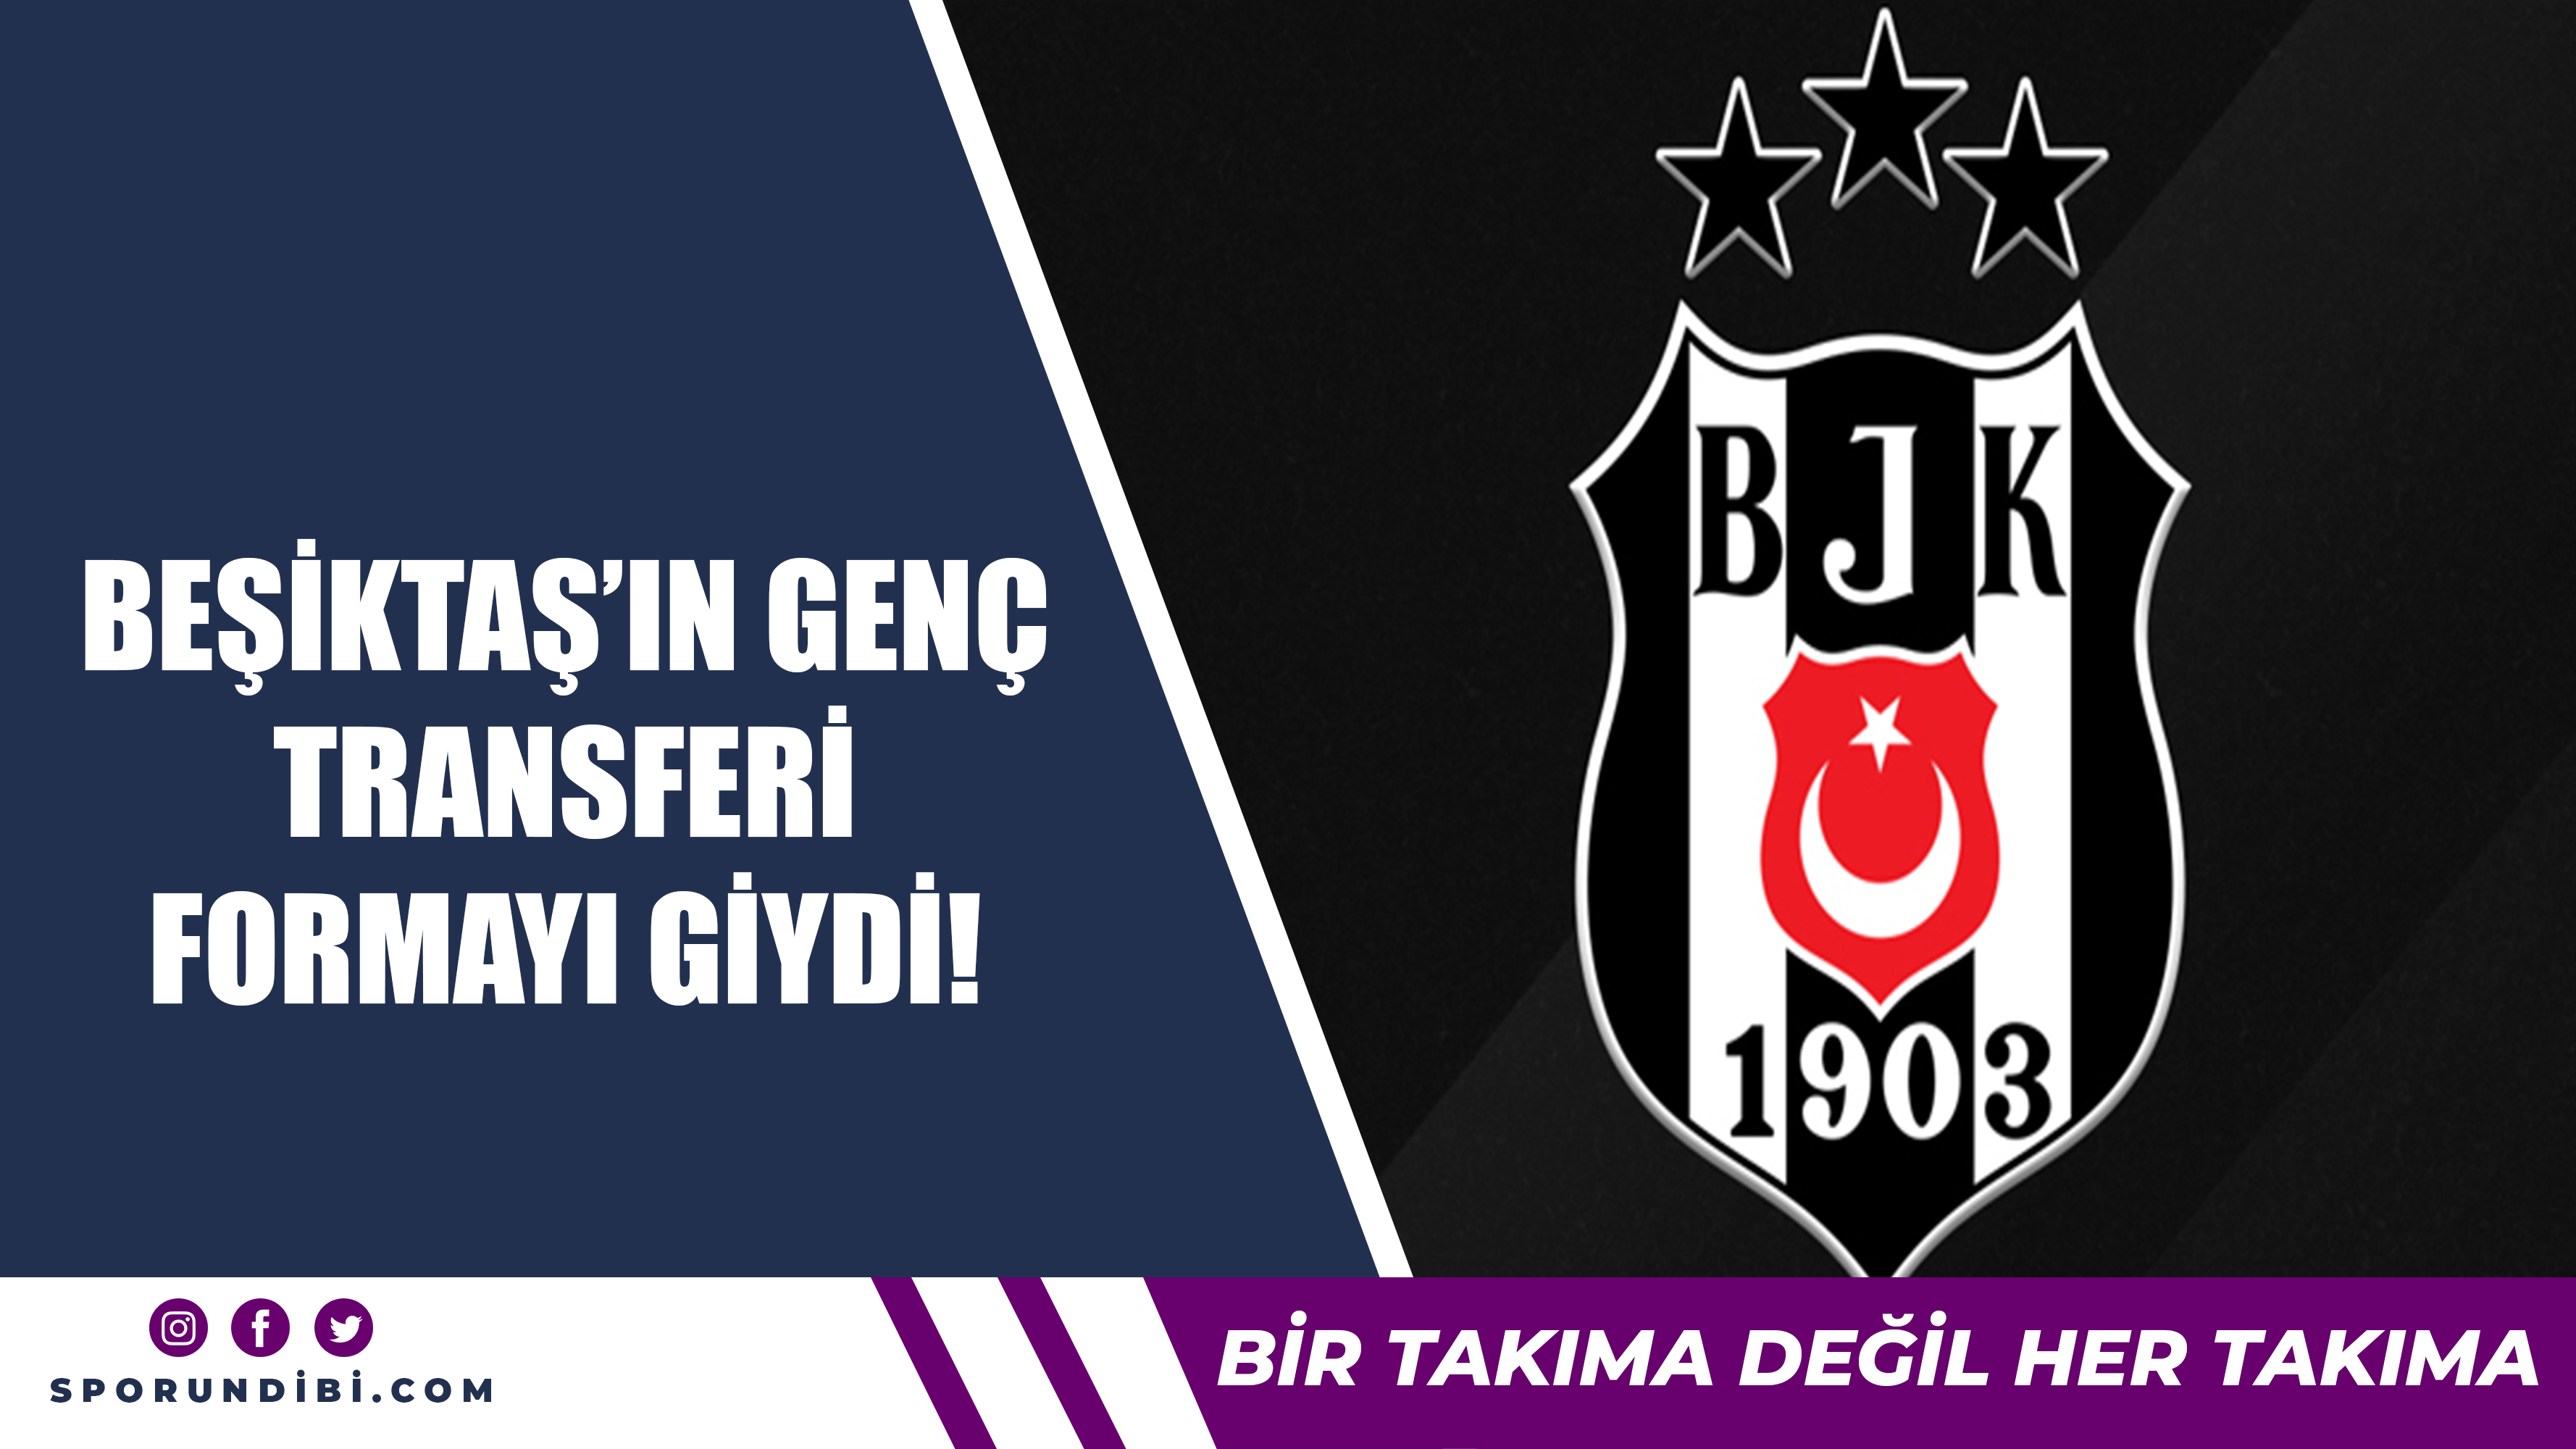 Beşiktaş'ın genç transferi formayı giydi!